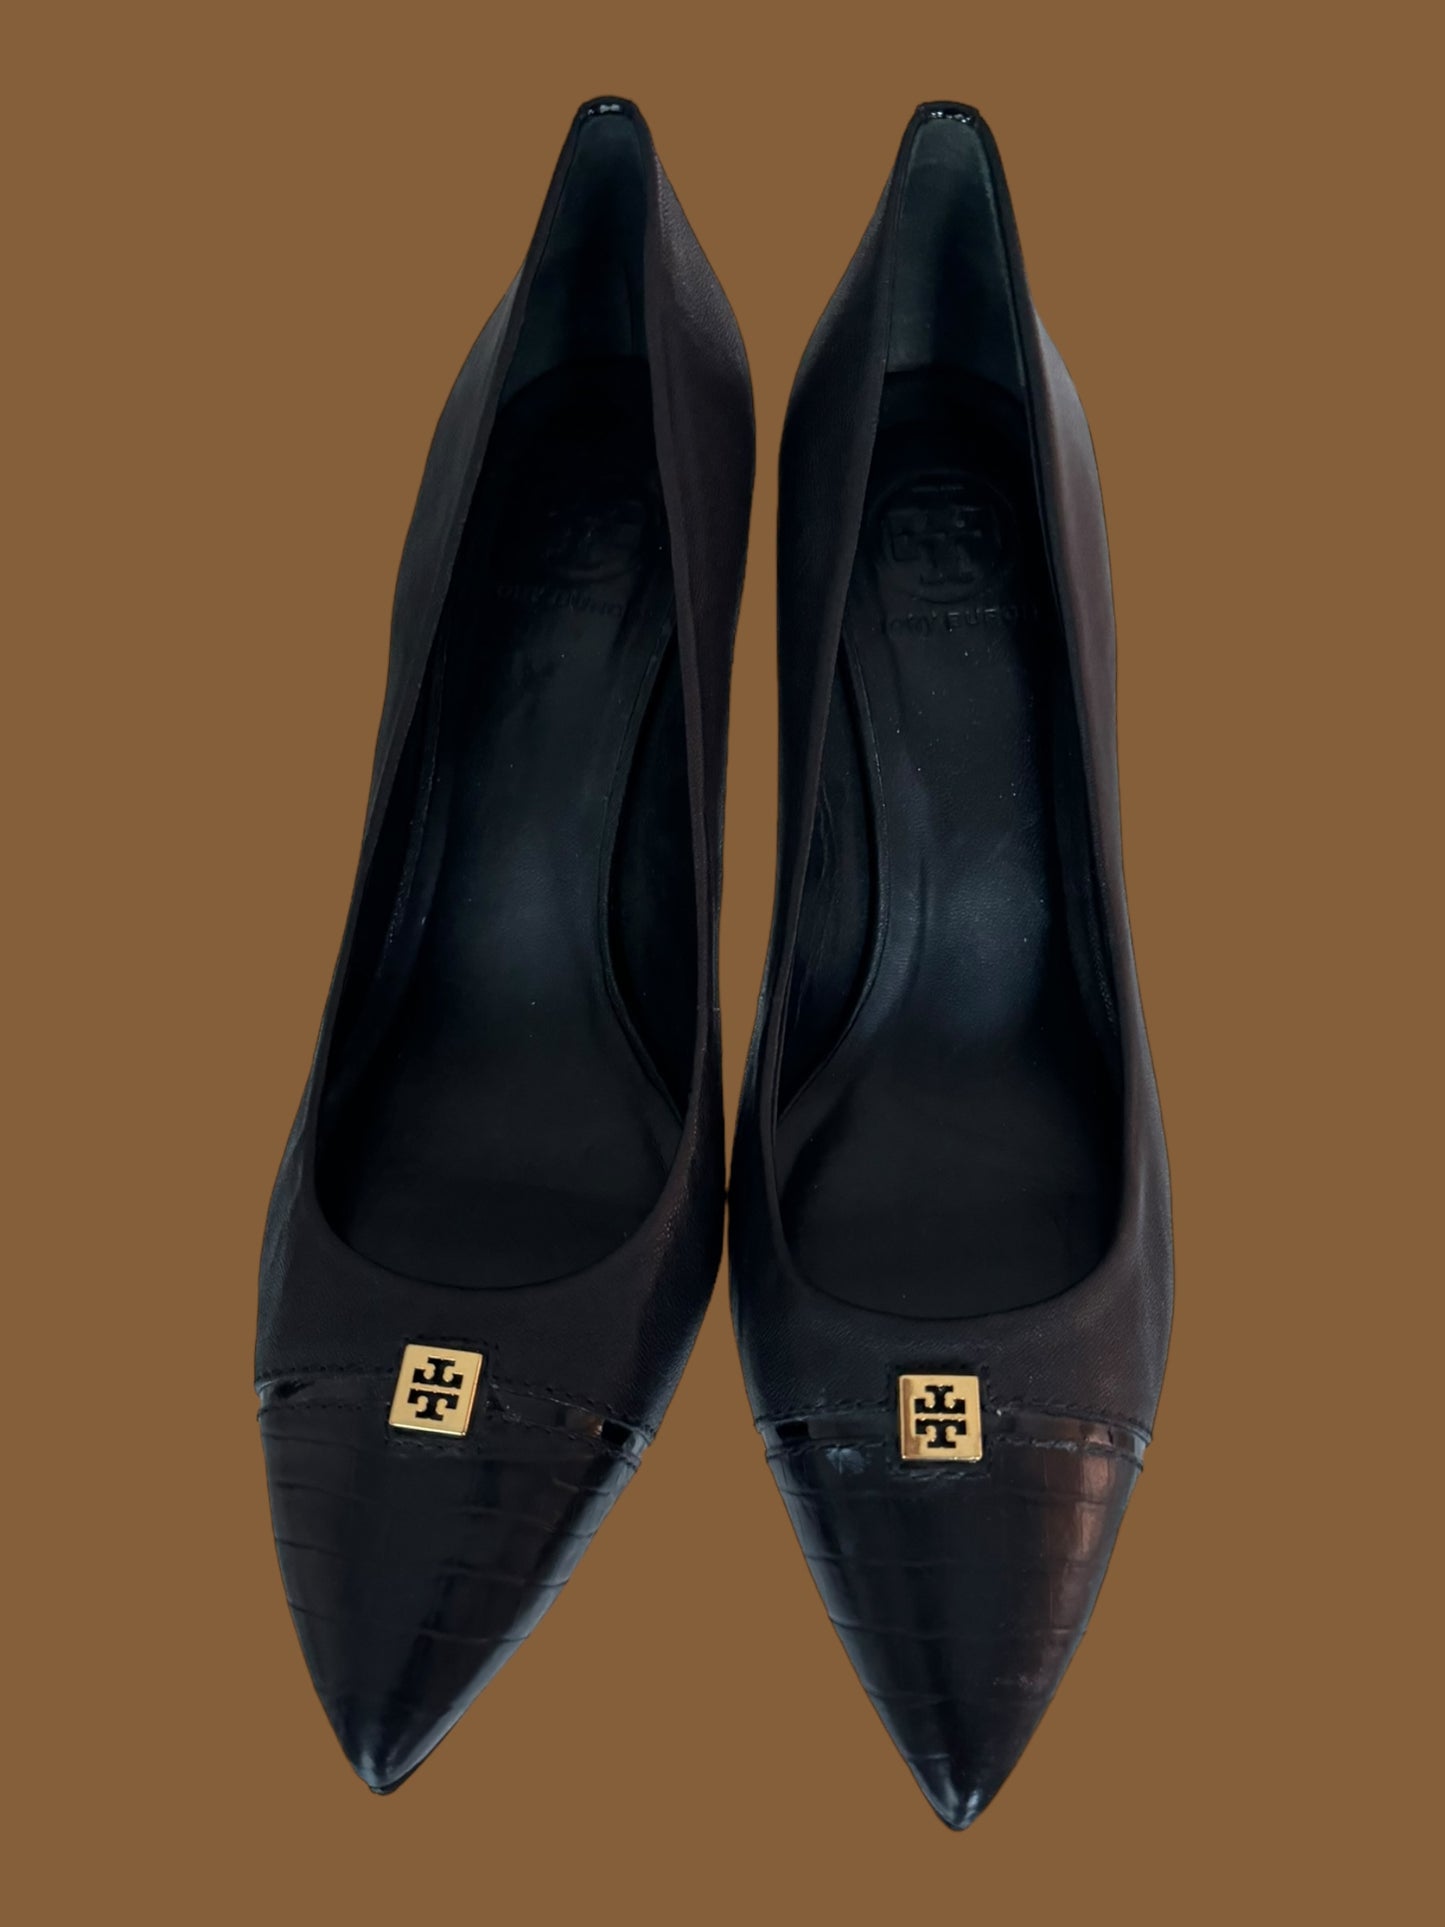 TORY BURCH black heels size 11